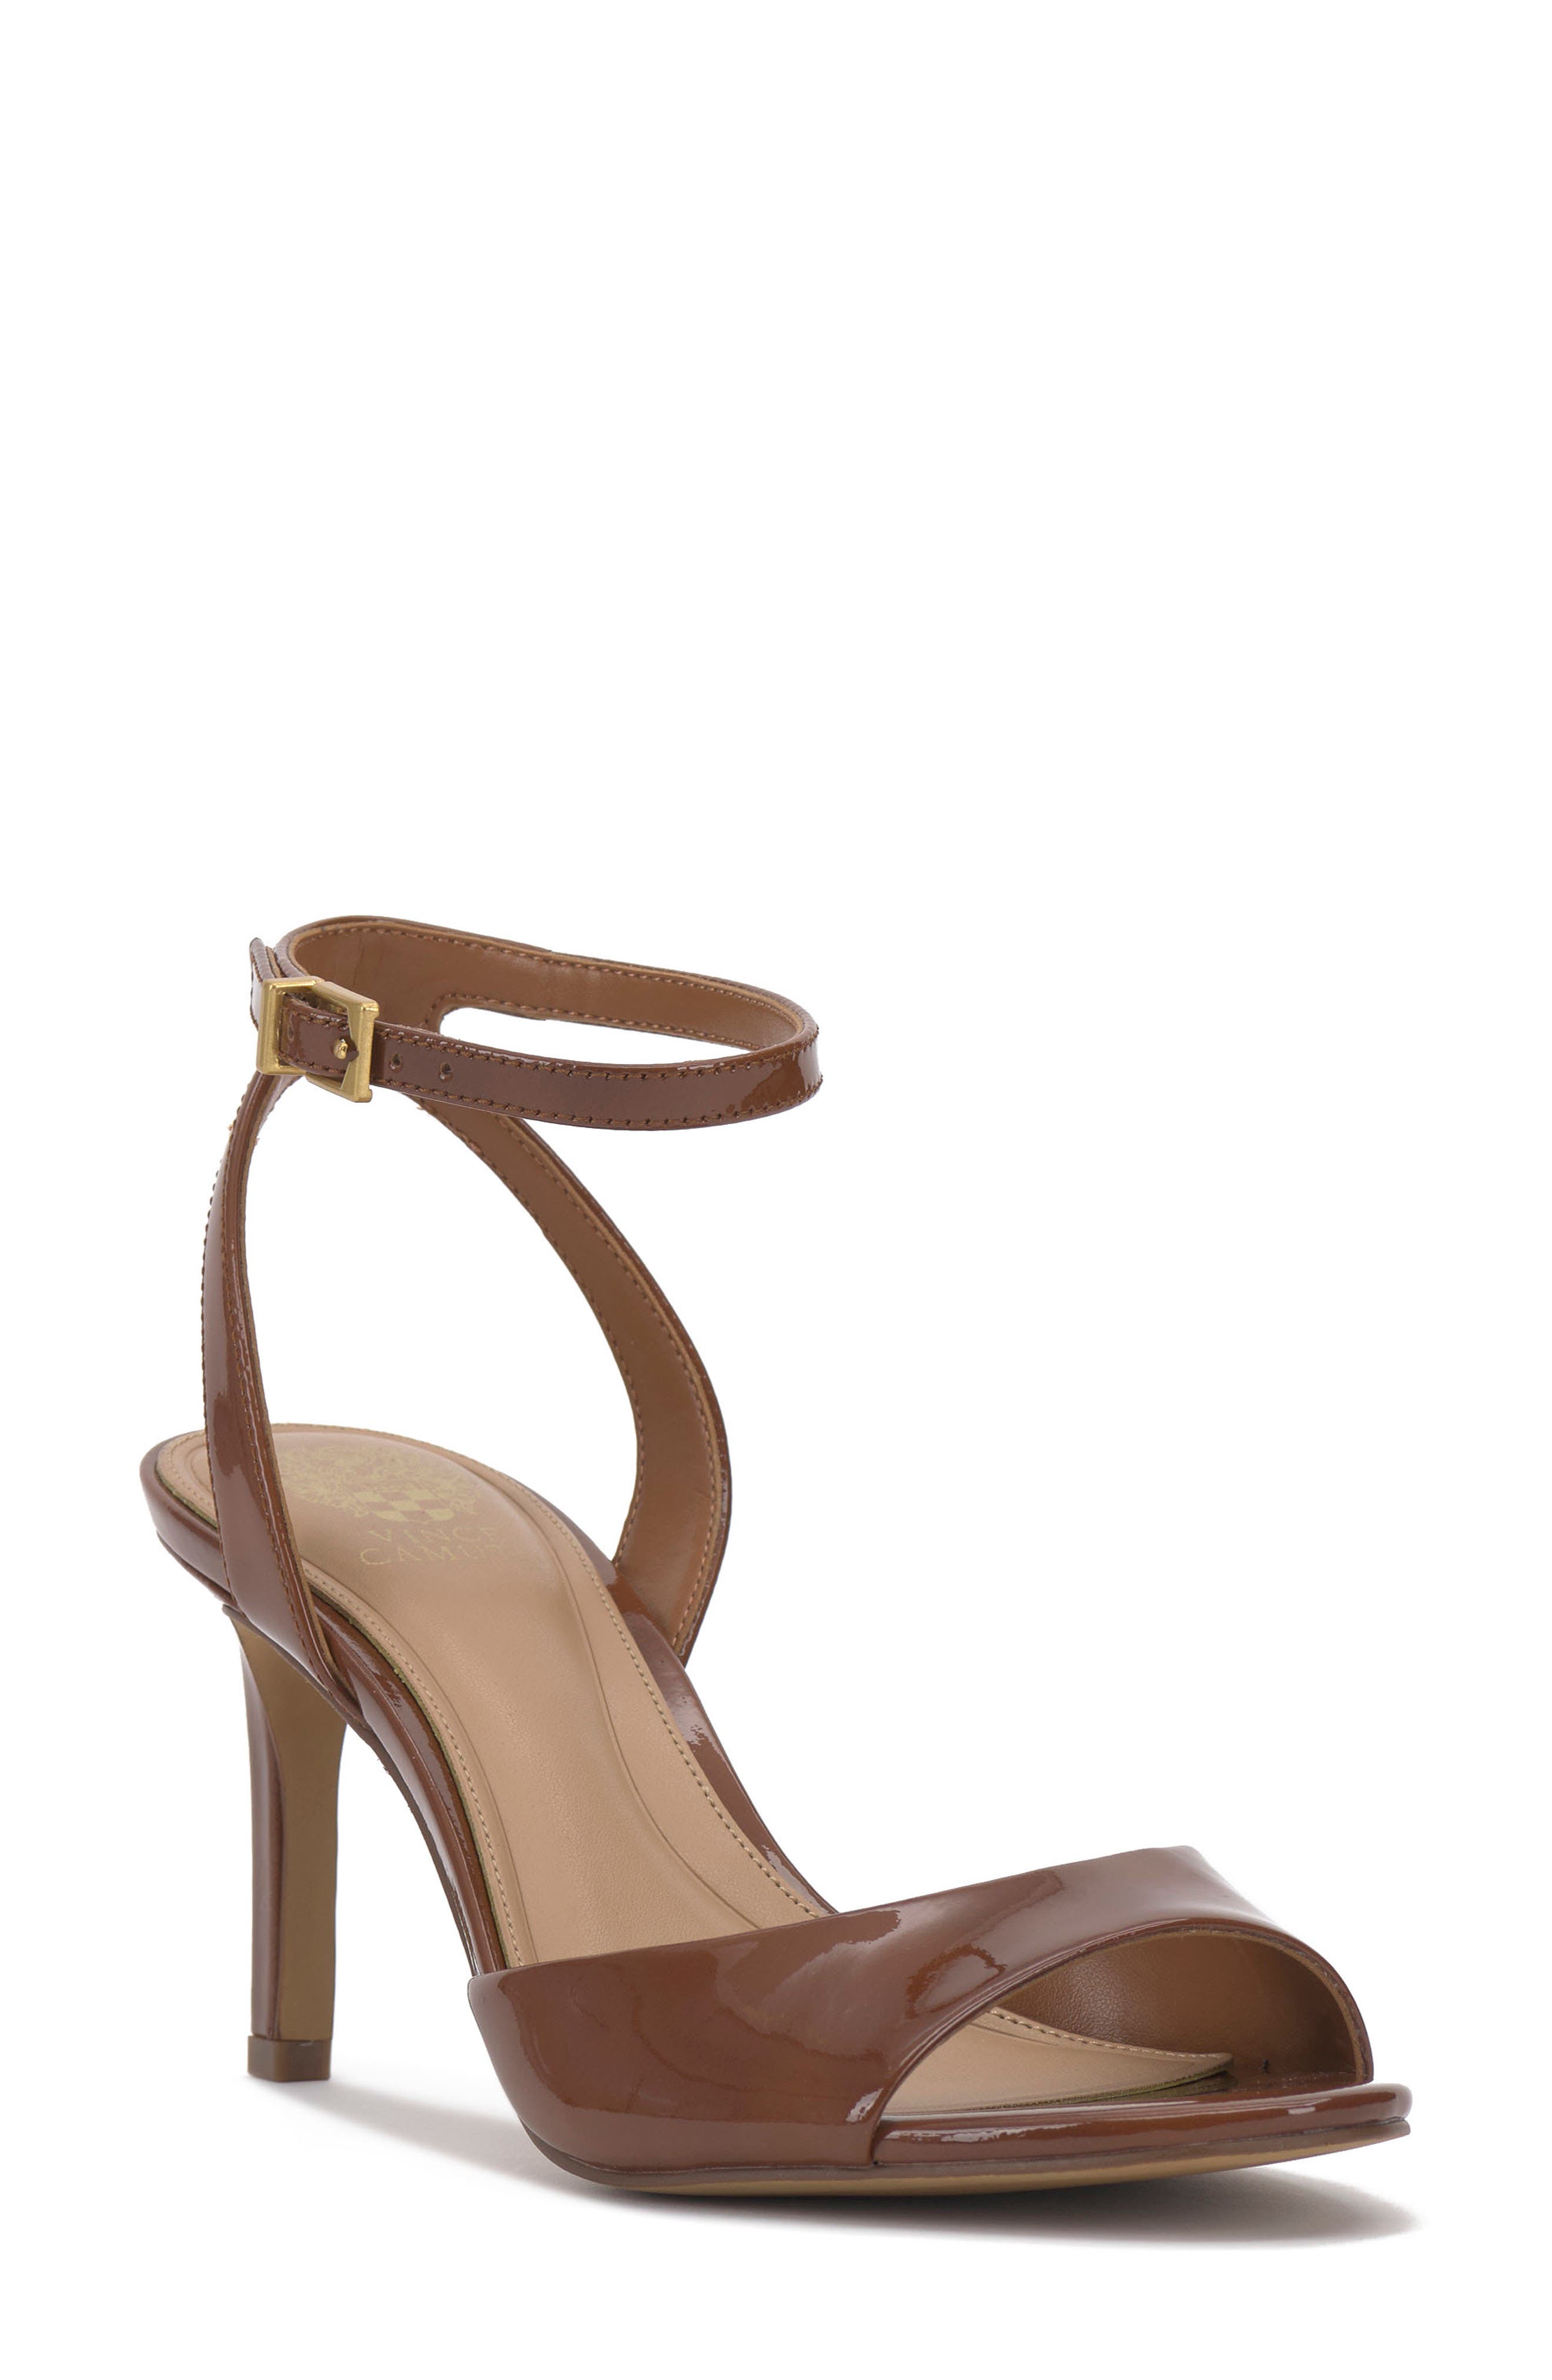 brown dress sandals